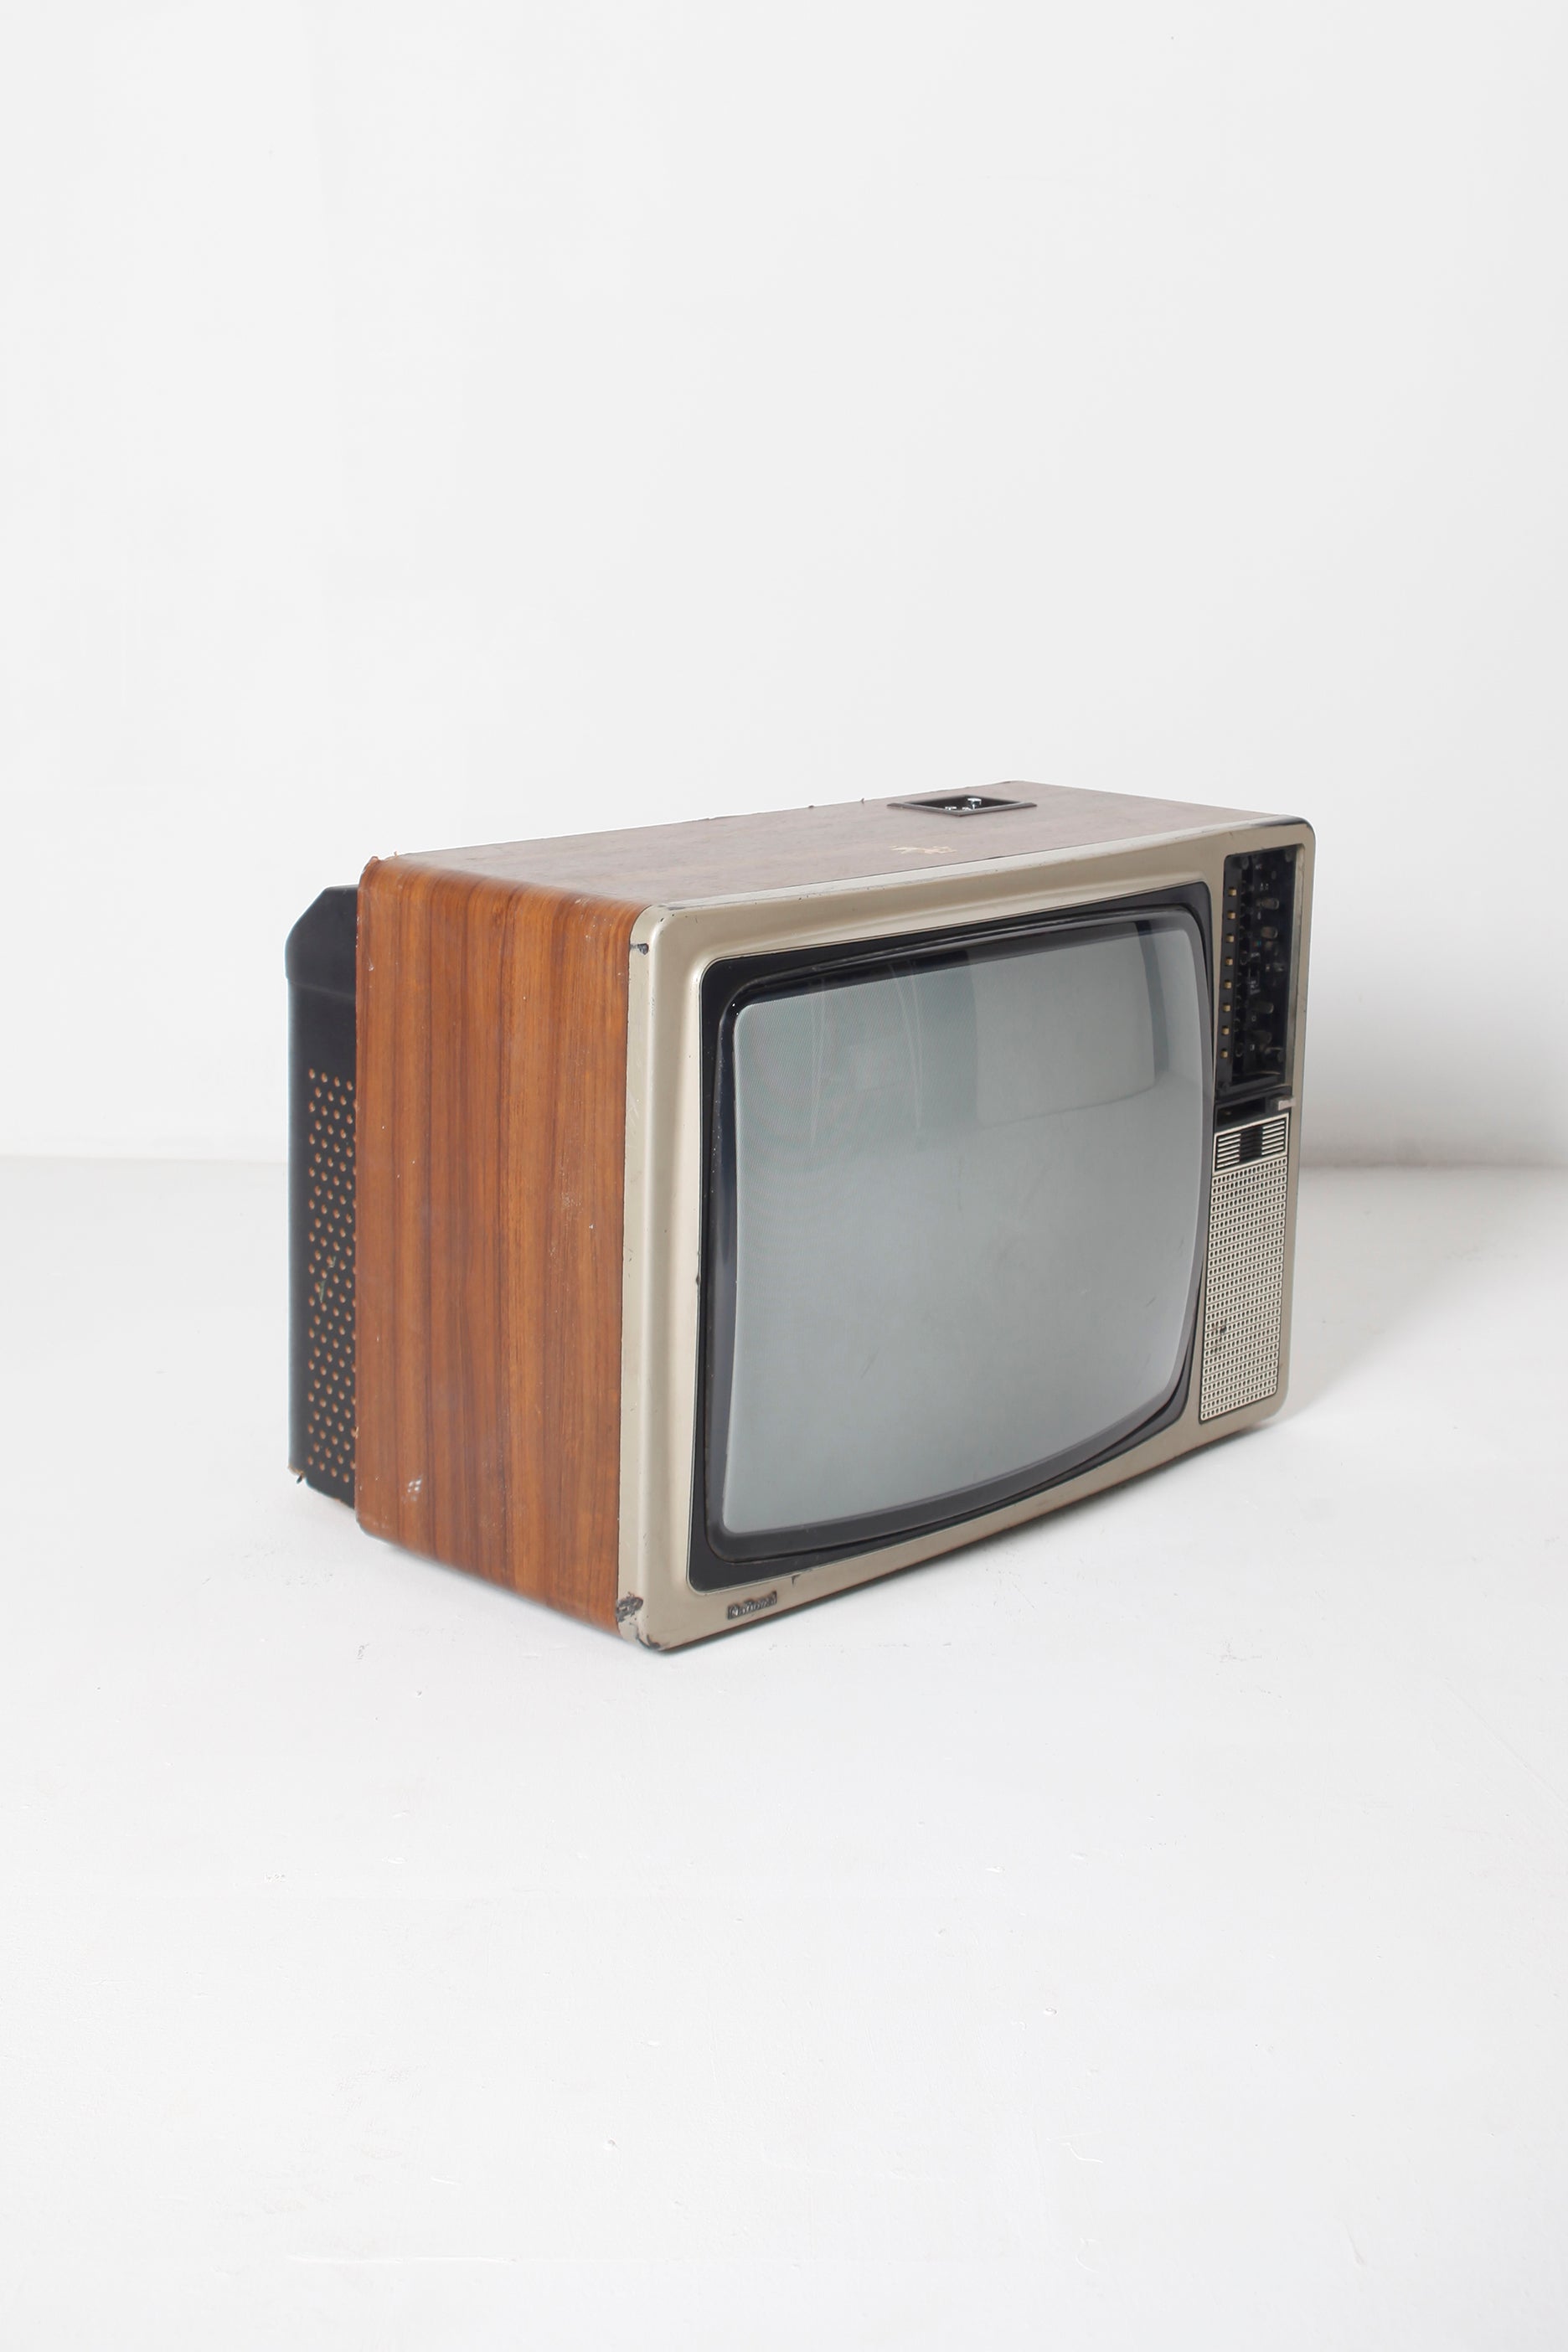 Vintage TV